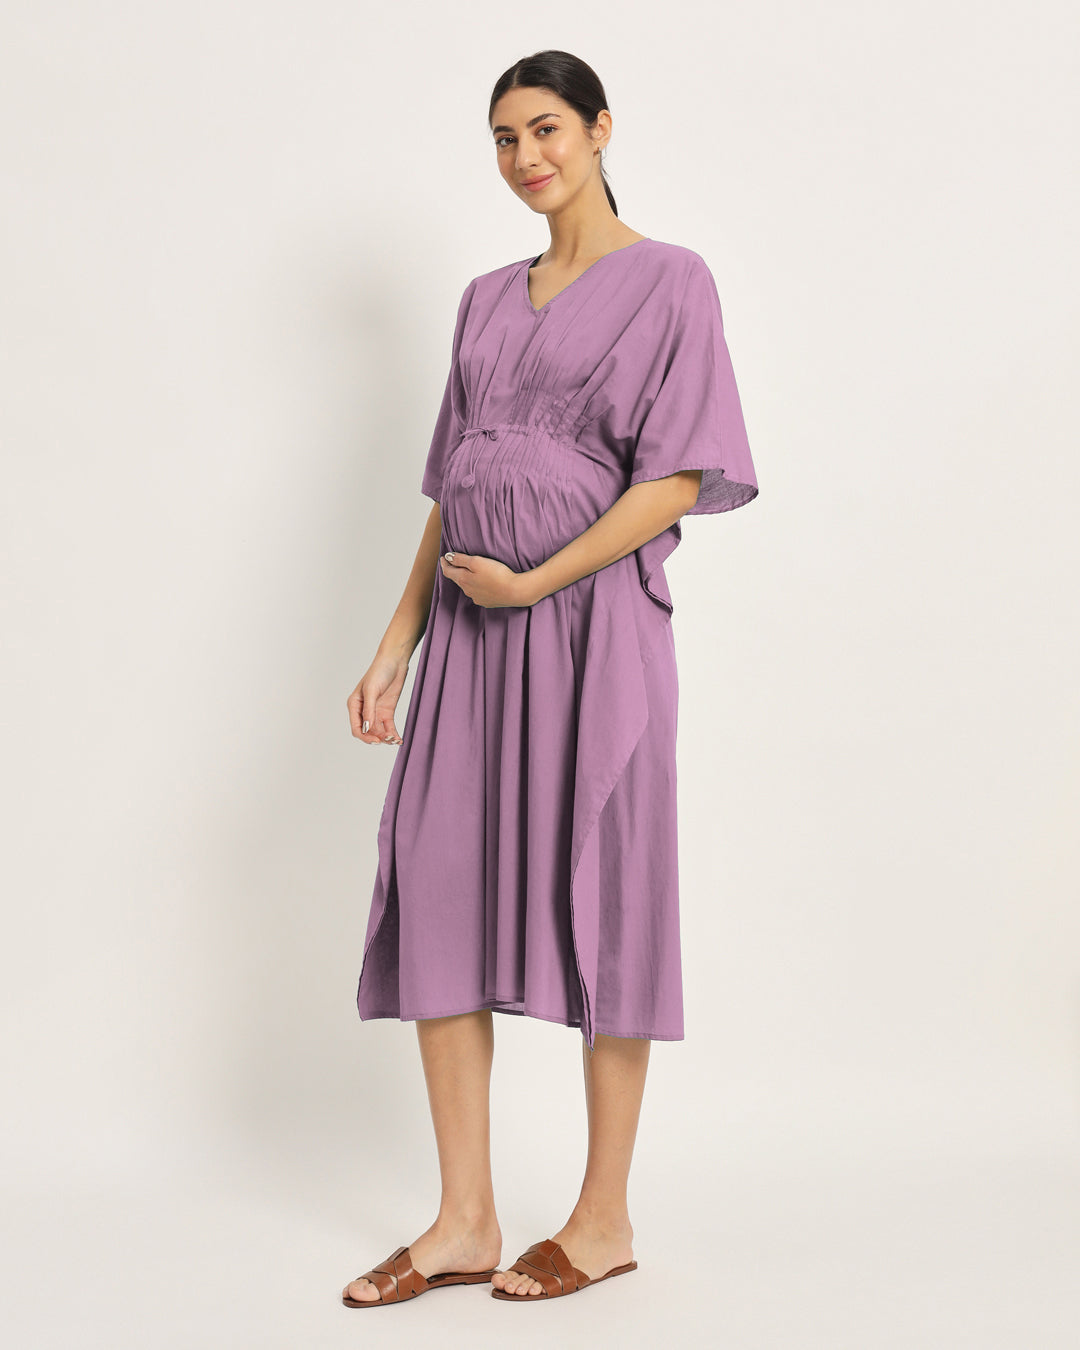 Combo: Black & Iris Pink Mommy Mode Maternity & Nursing Dress